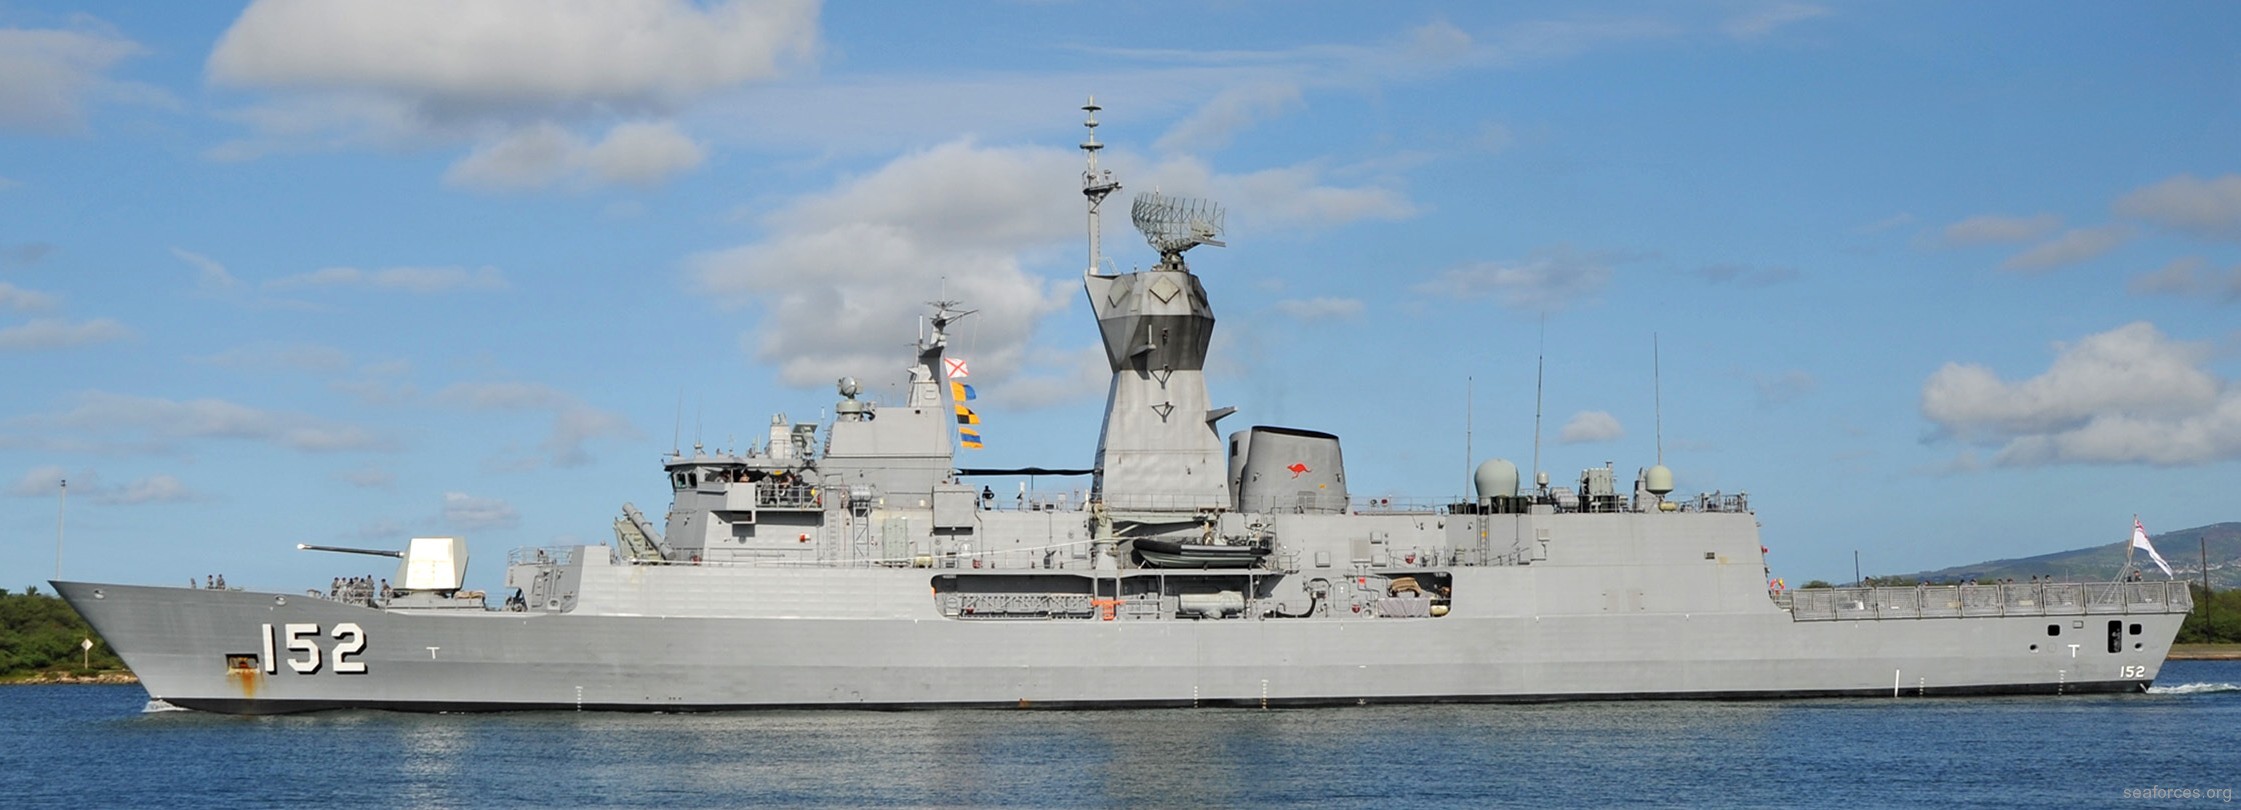 ffh-152 hmas warramunga anzac class frigate royal australian navy 2016 16 pearl harbor hawaii